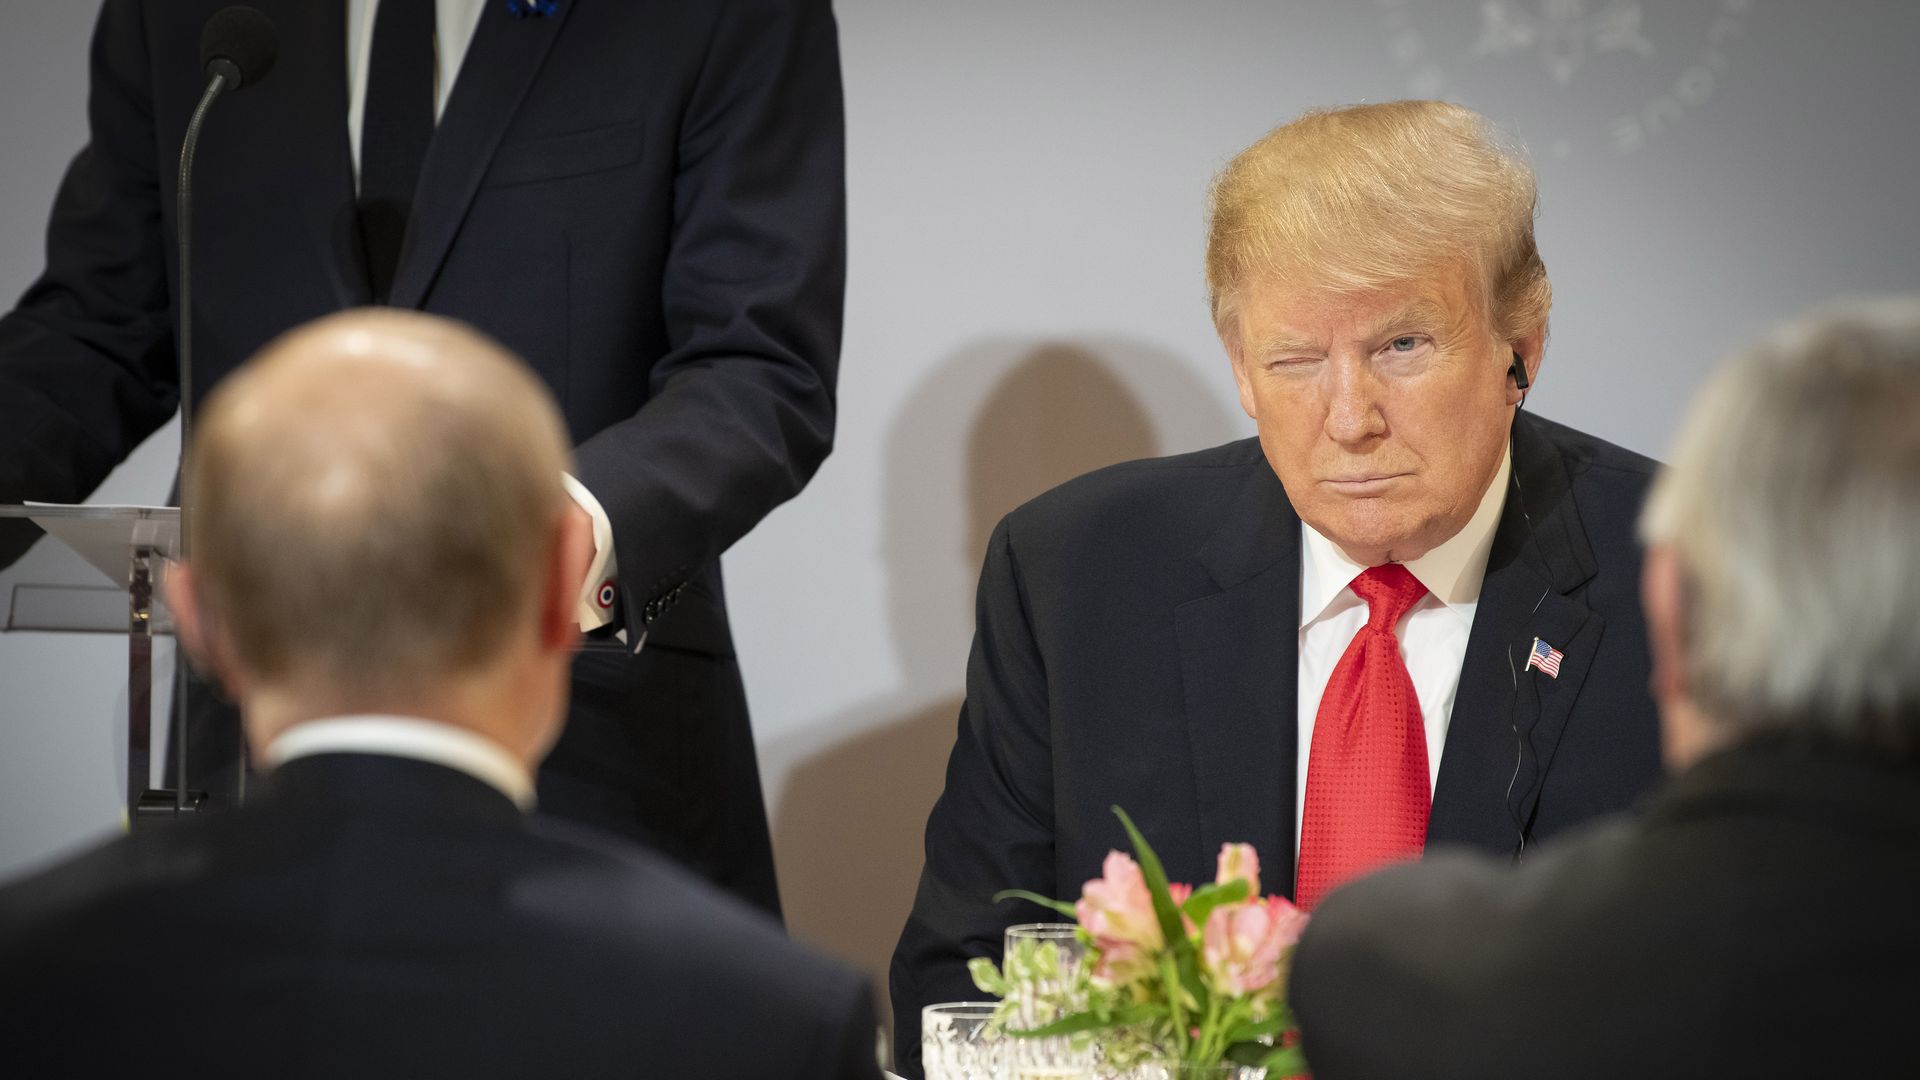 Trump winking at Putin